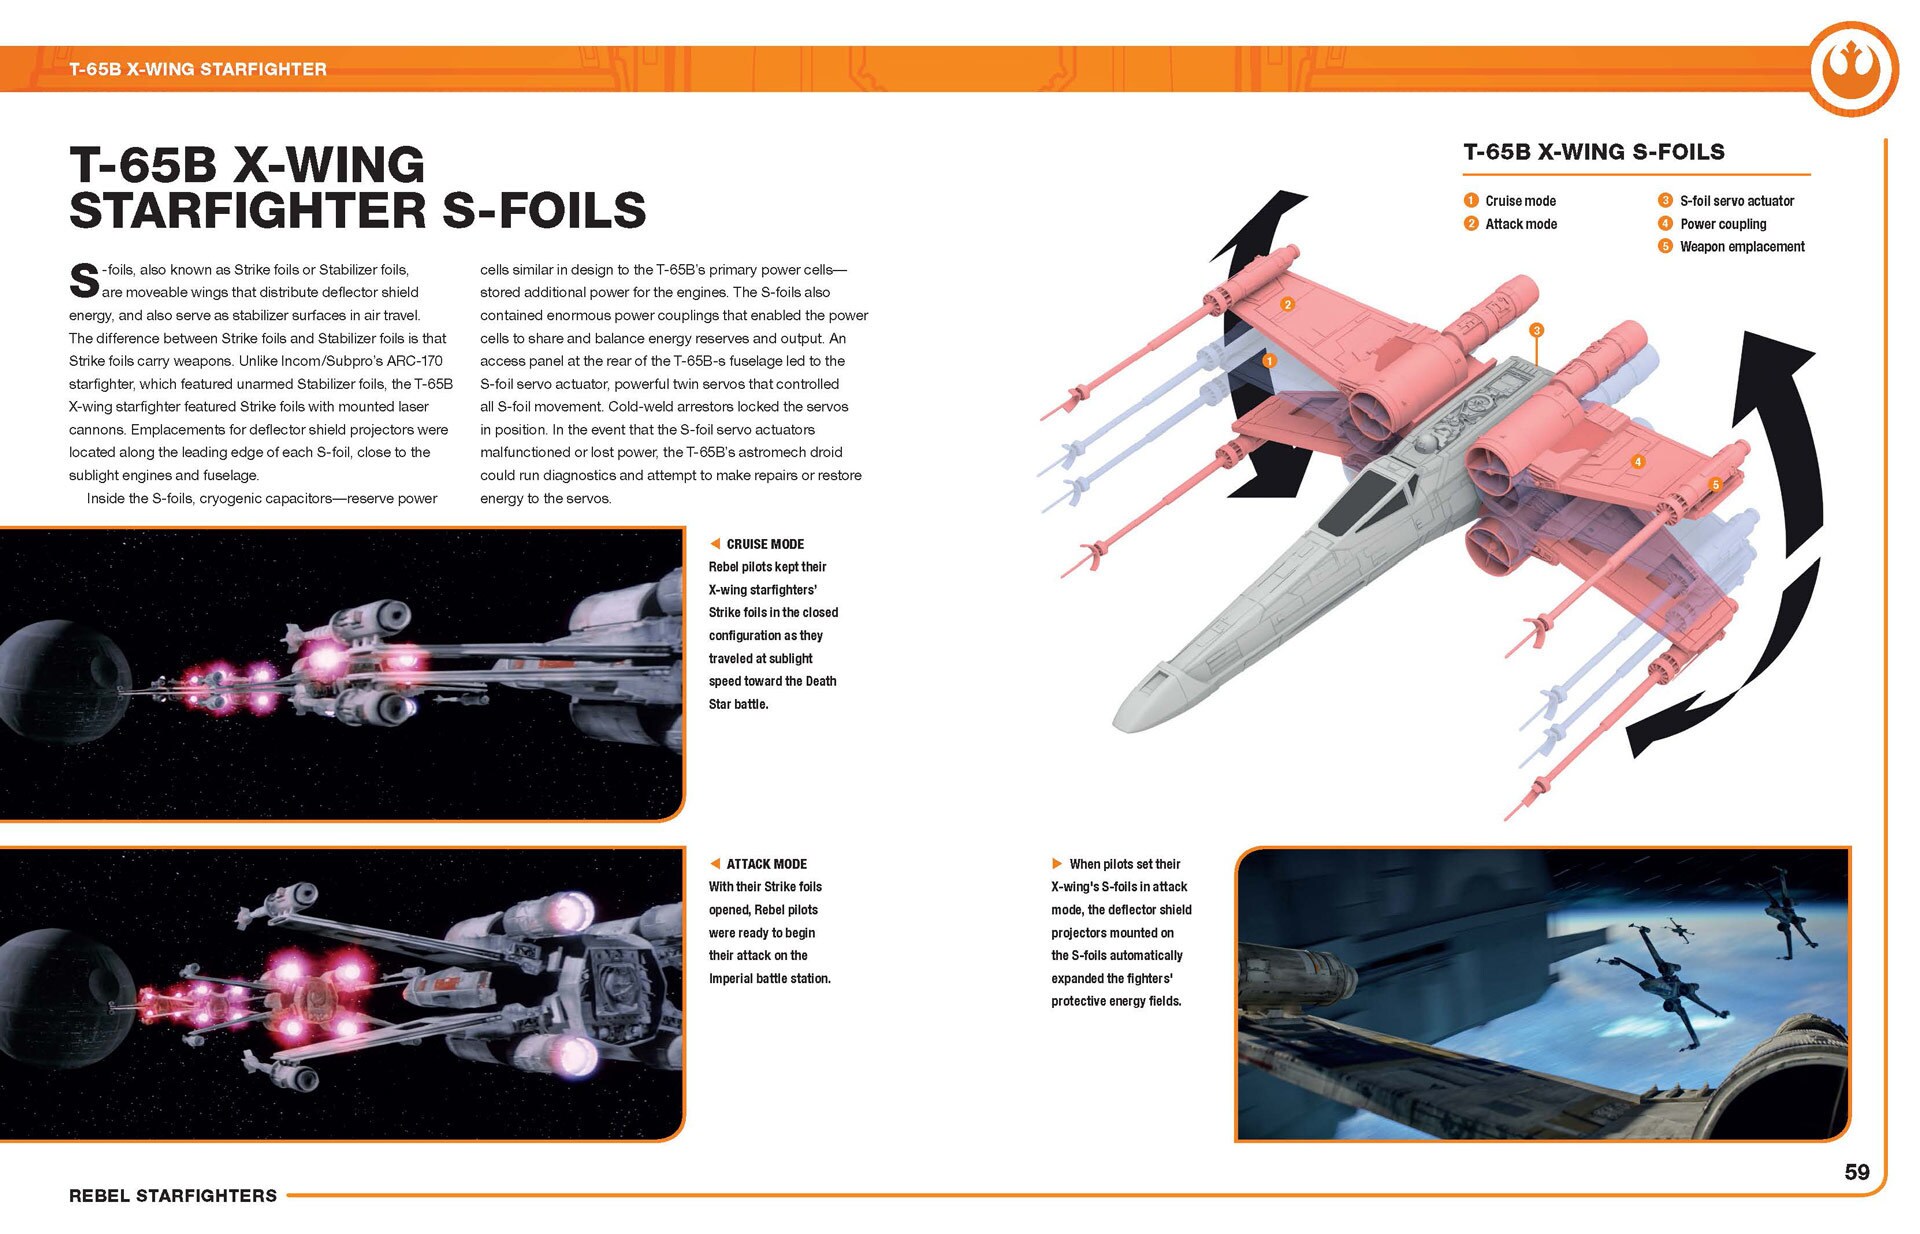 Rebel Starfighters book - X-wing spread